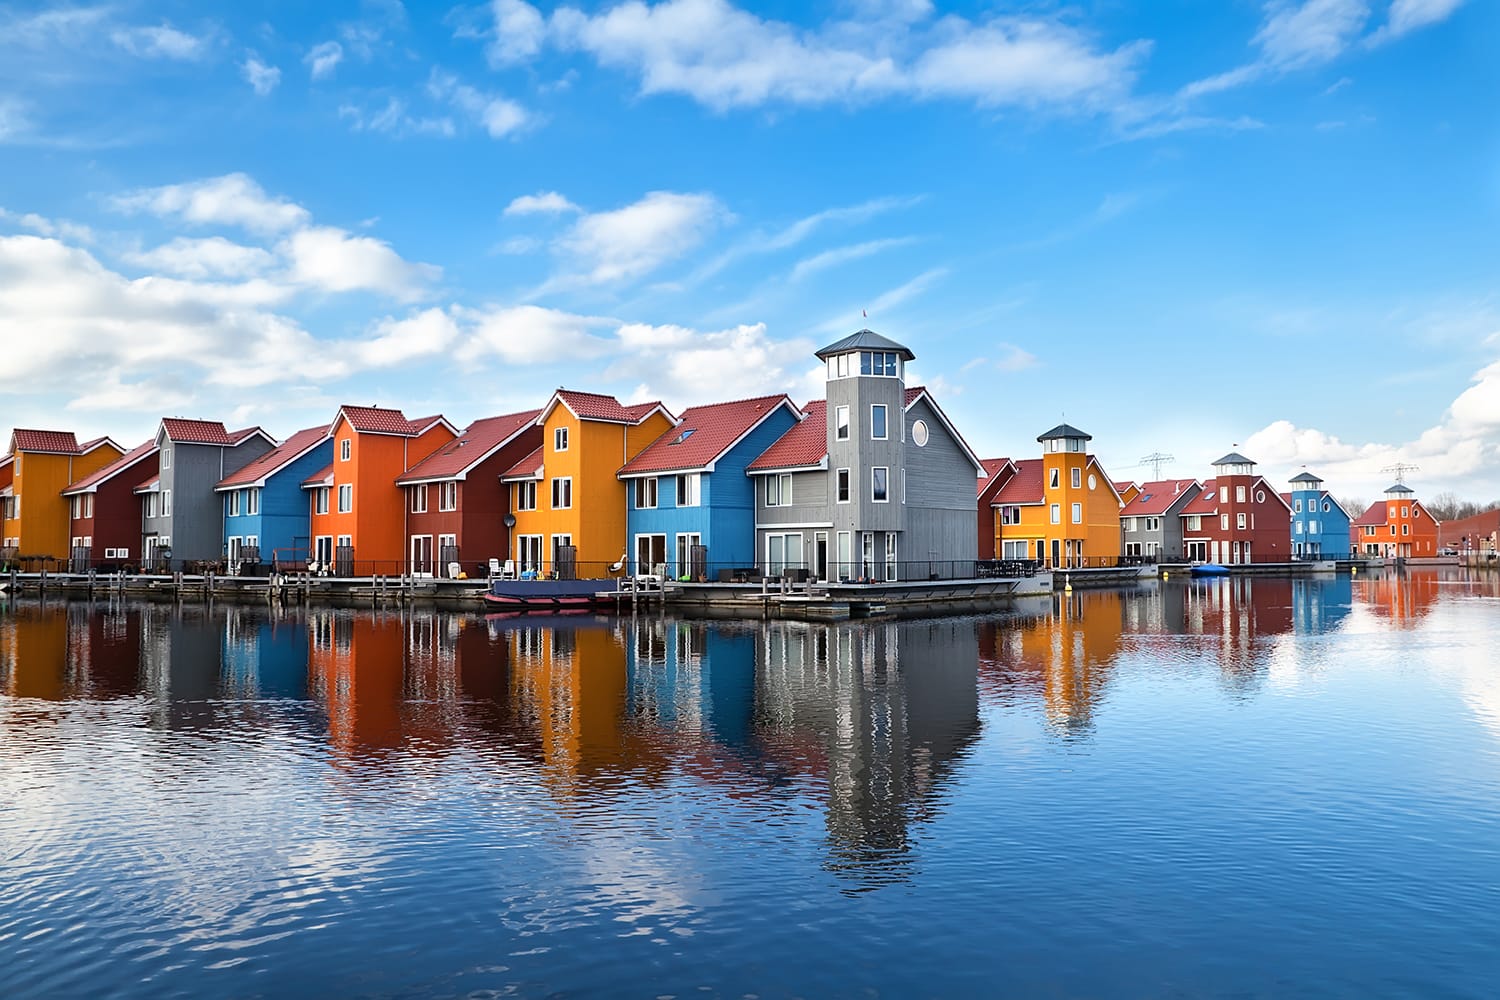 Reitdiephaven - colorful buildings on water in Groningen, Netherlands